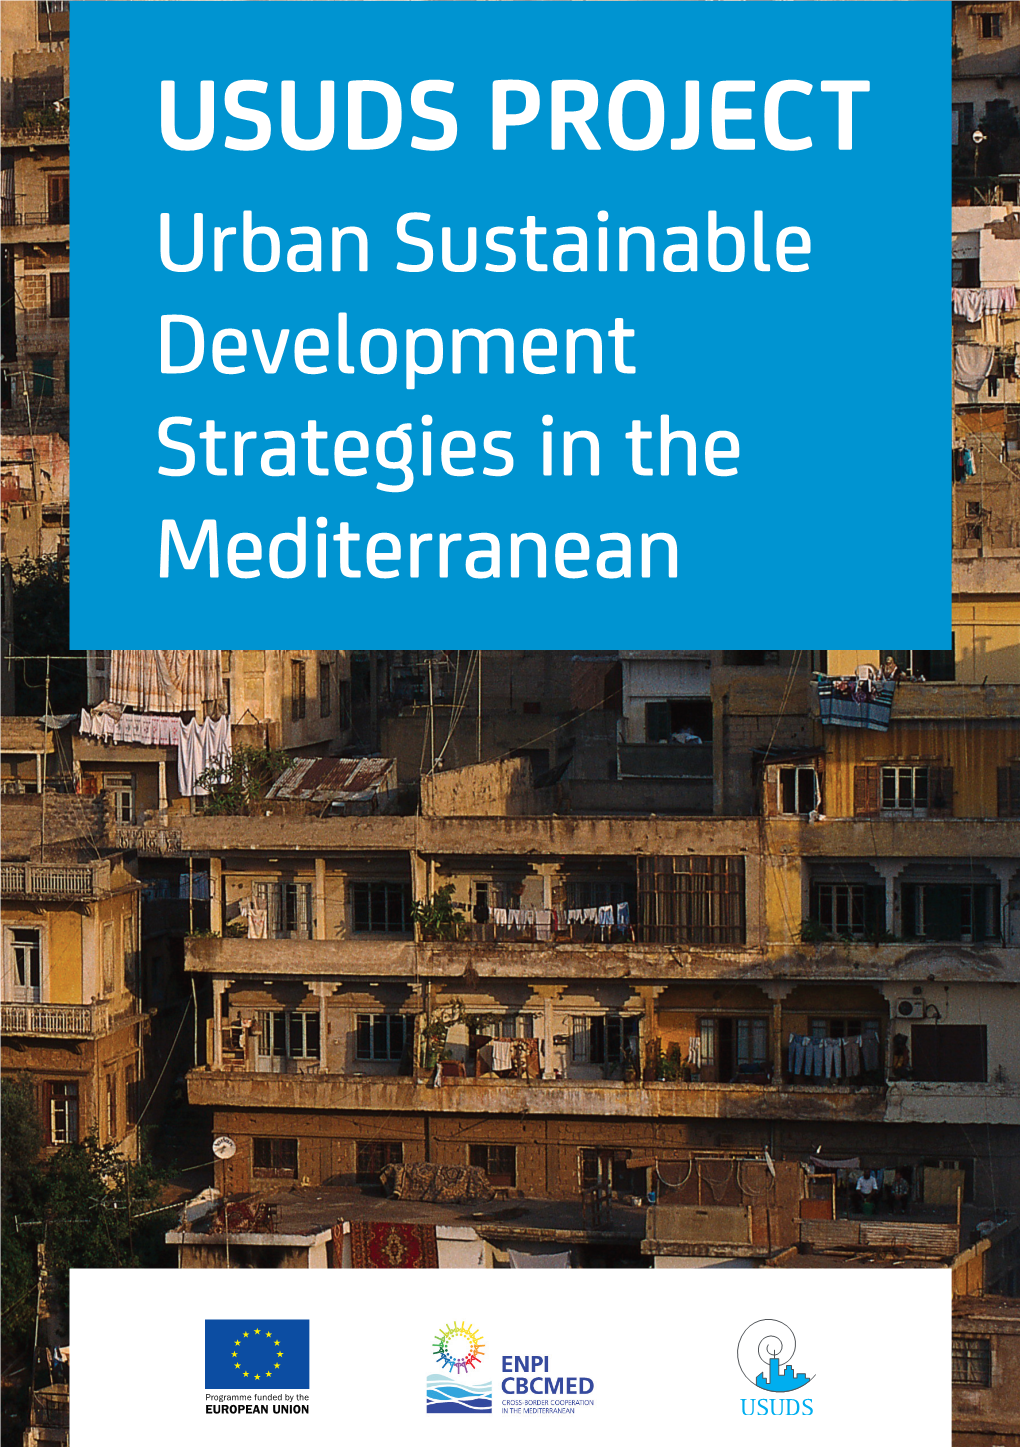 USUDS PROJECT Urban Sustainable Development Strategies in the Mediterranean